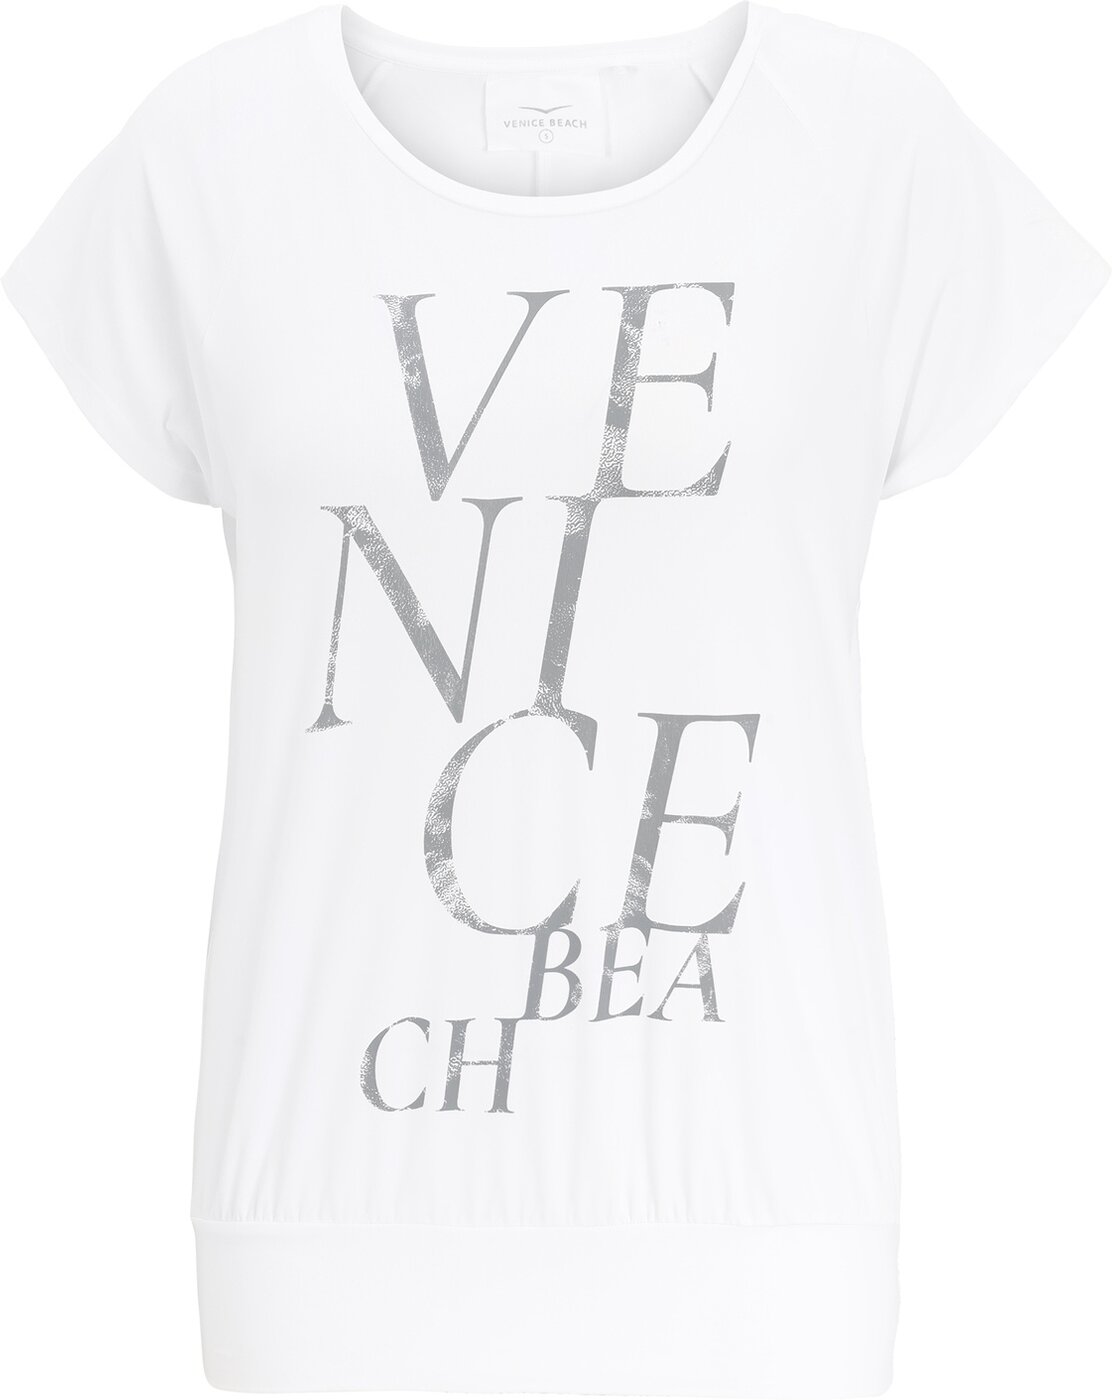 Venice Beach VB_Nobel DL 02 T-Shirt online kaufen